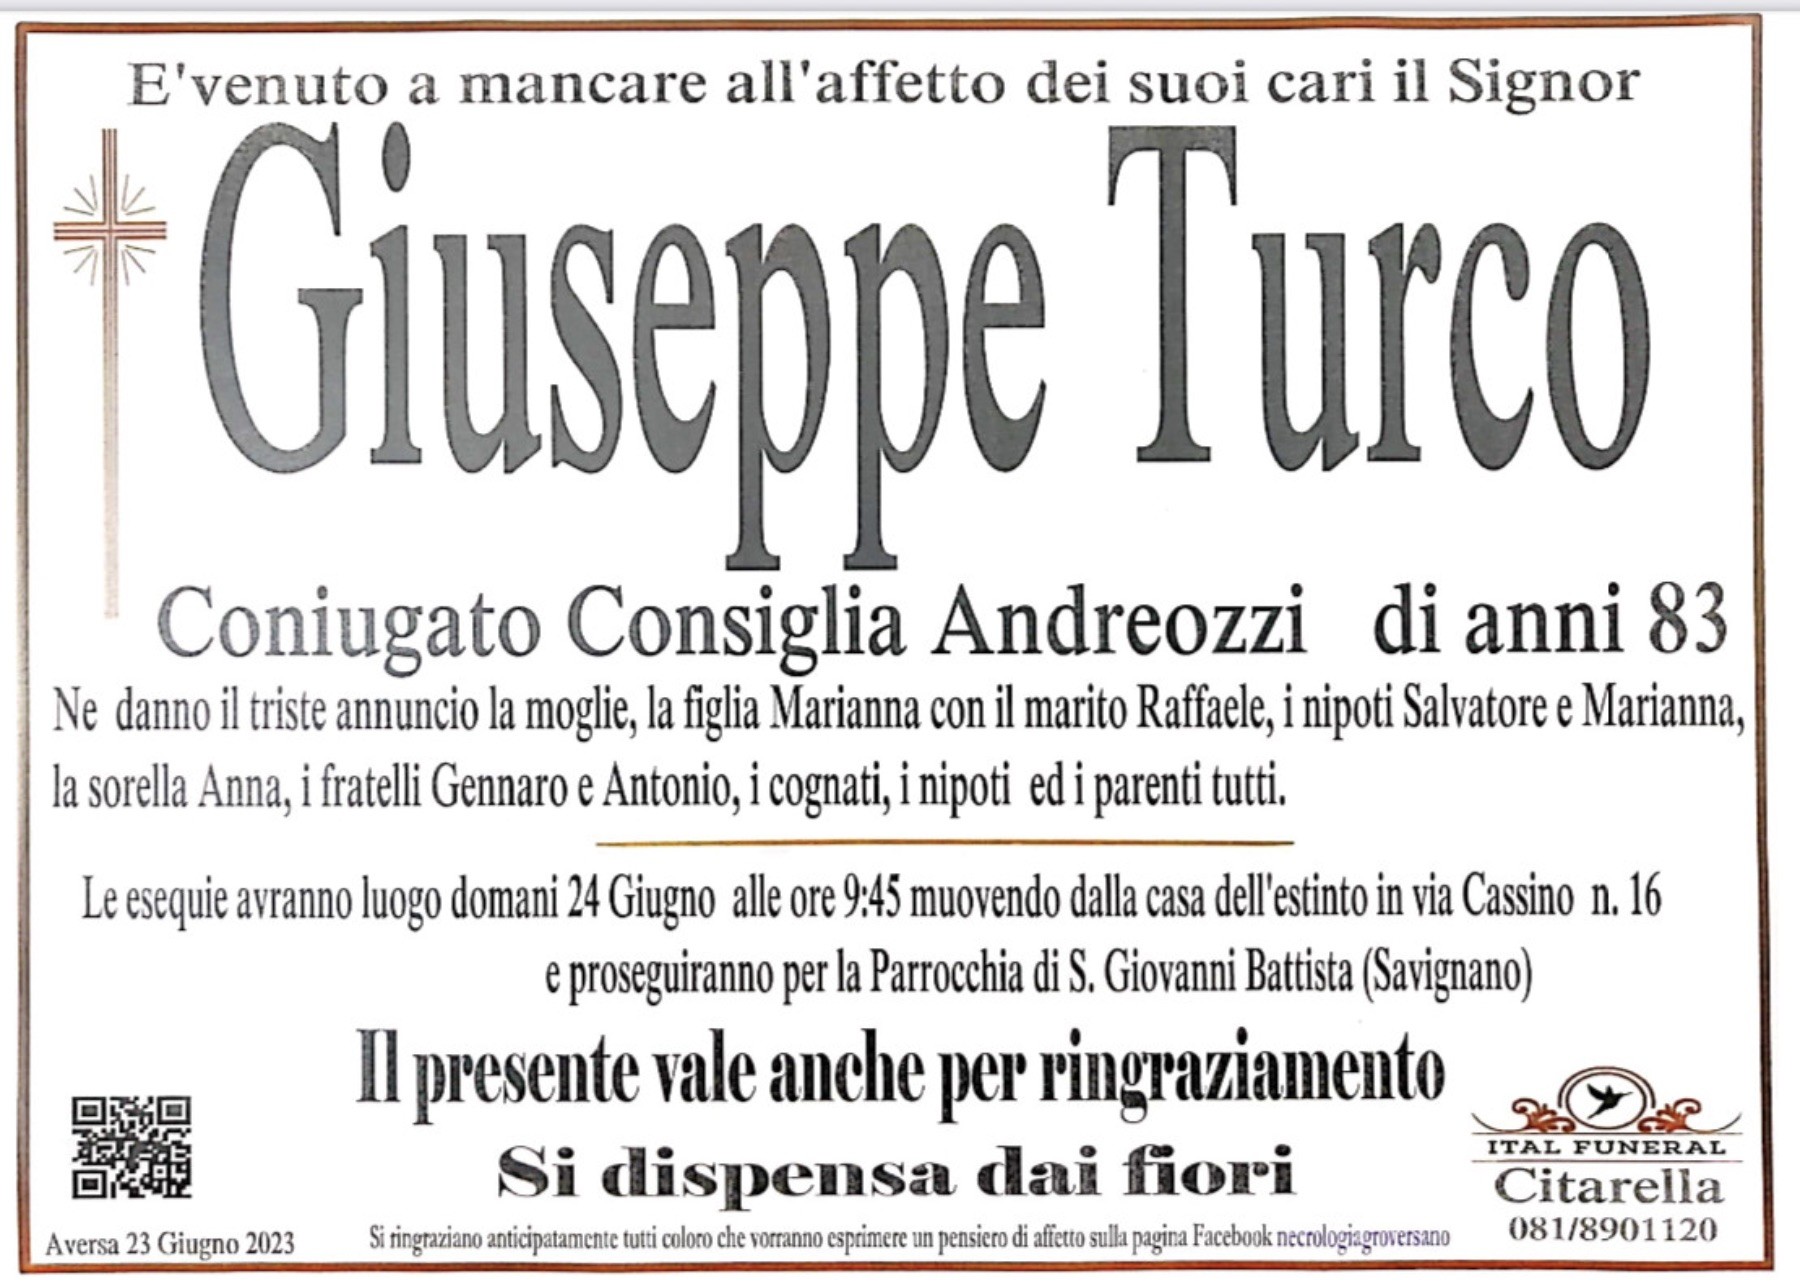 Giuseppe Turco